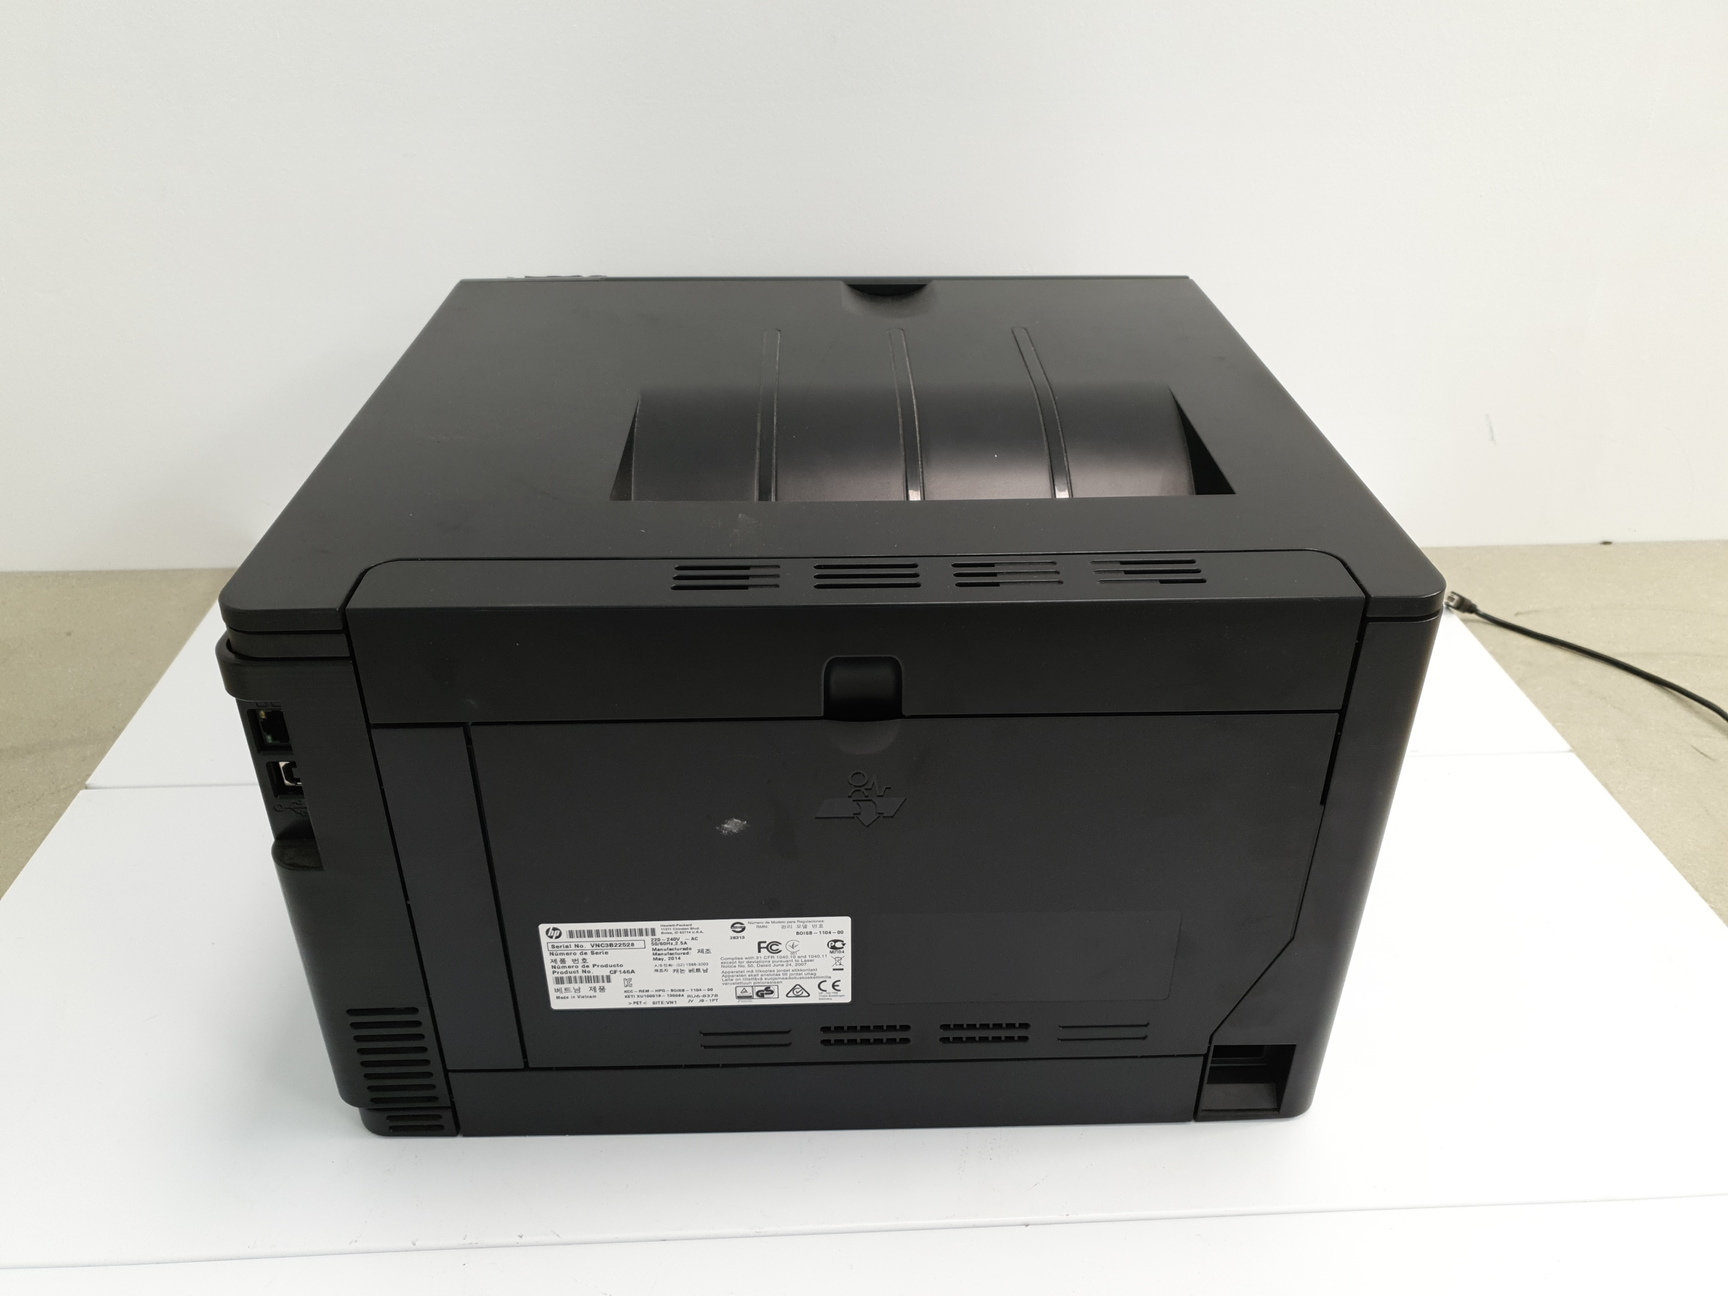 HP LaserJet Pro 200 Color M251n printer/all-in-one - Hardware Info